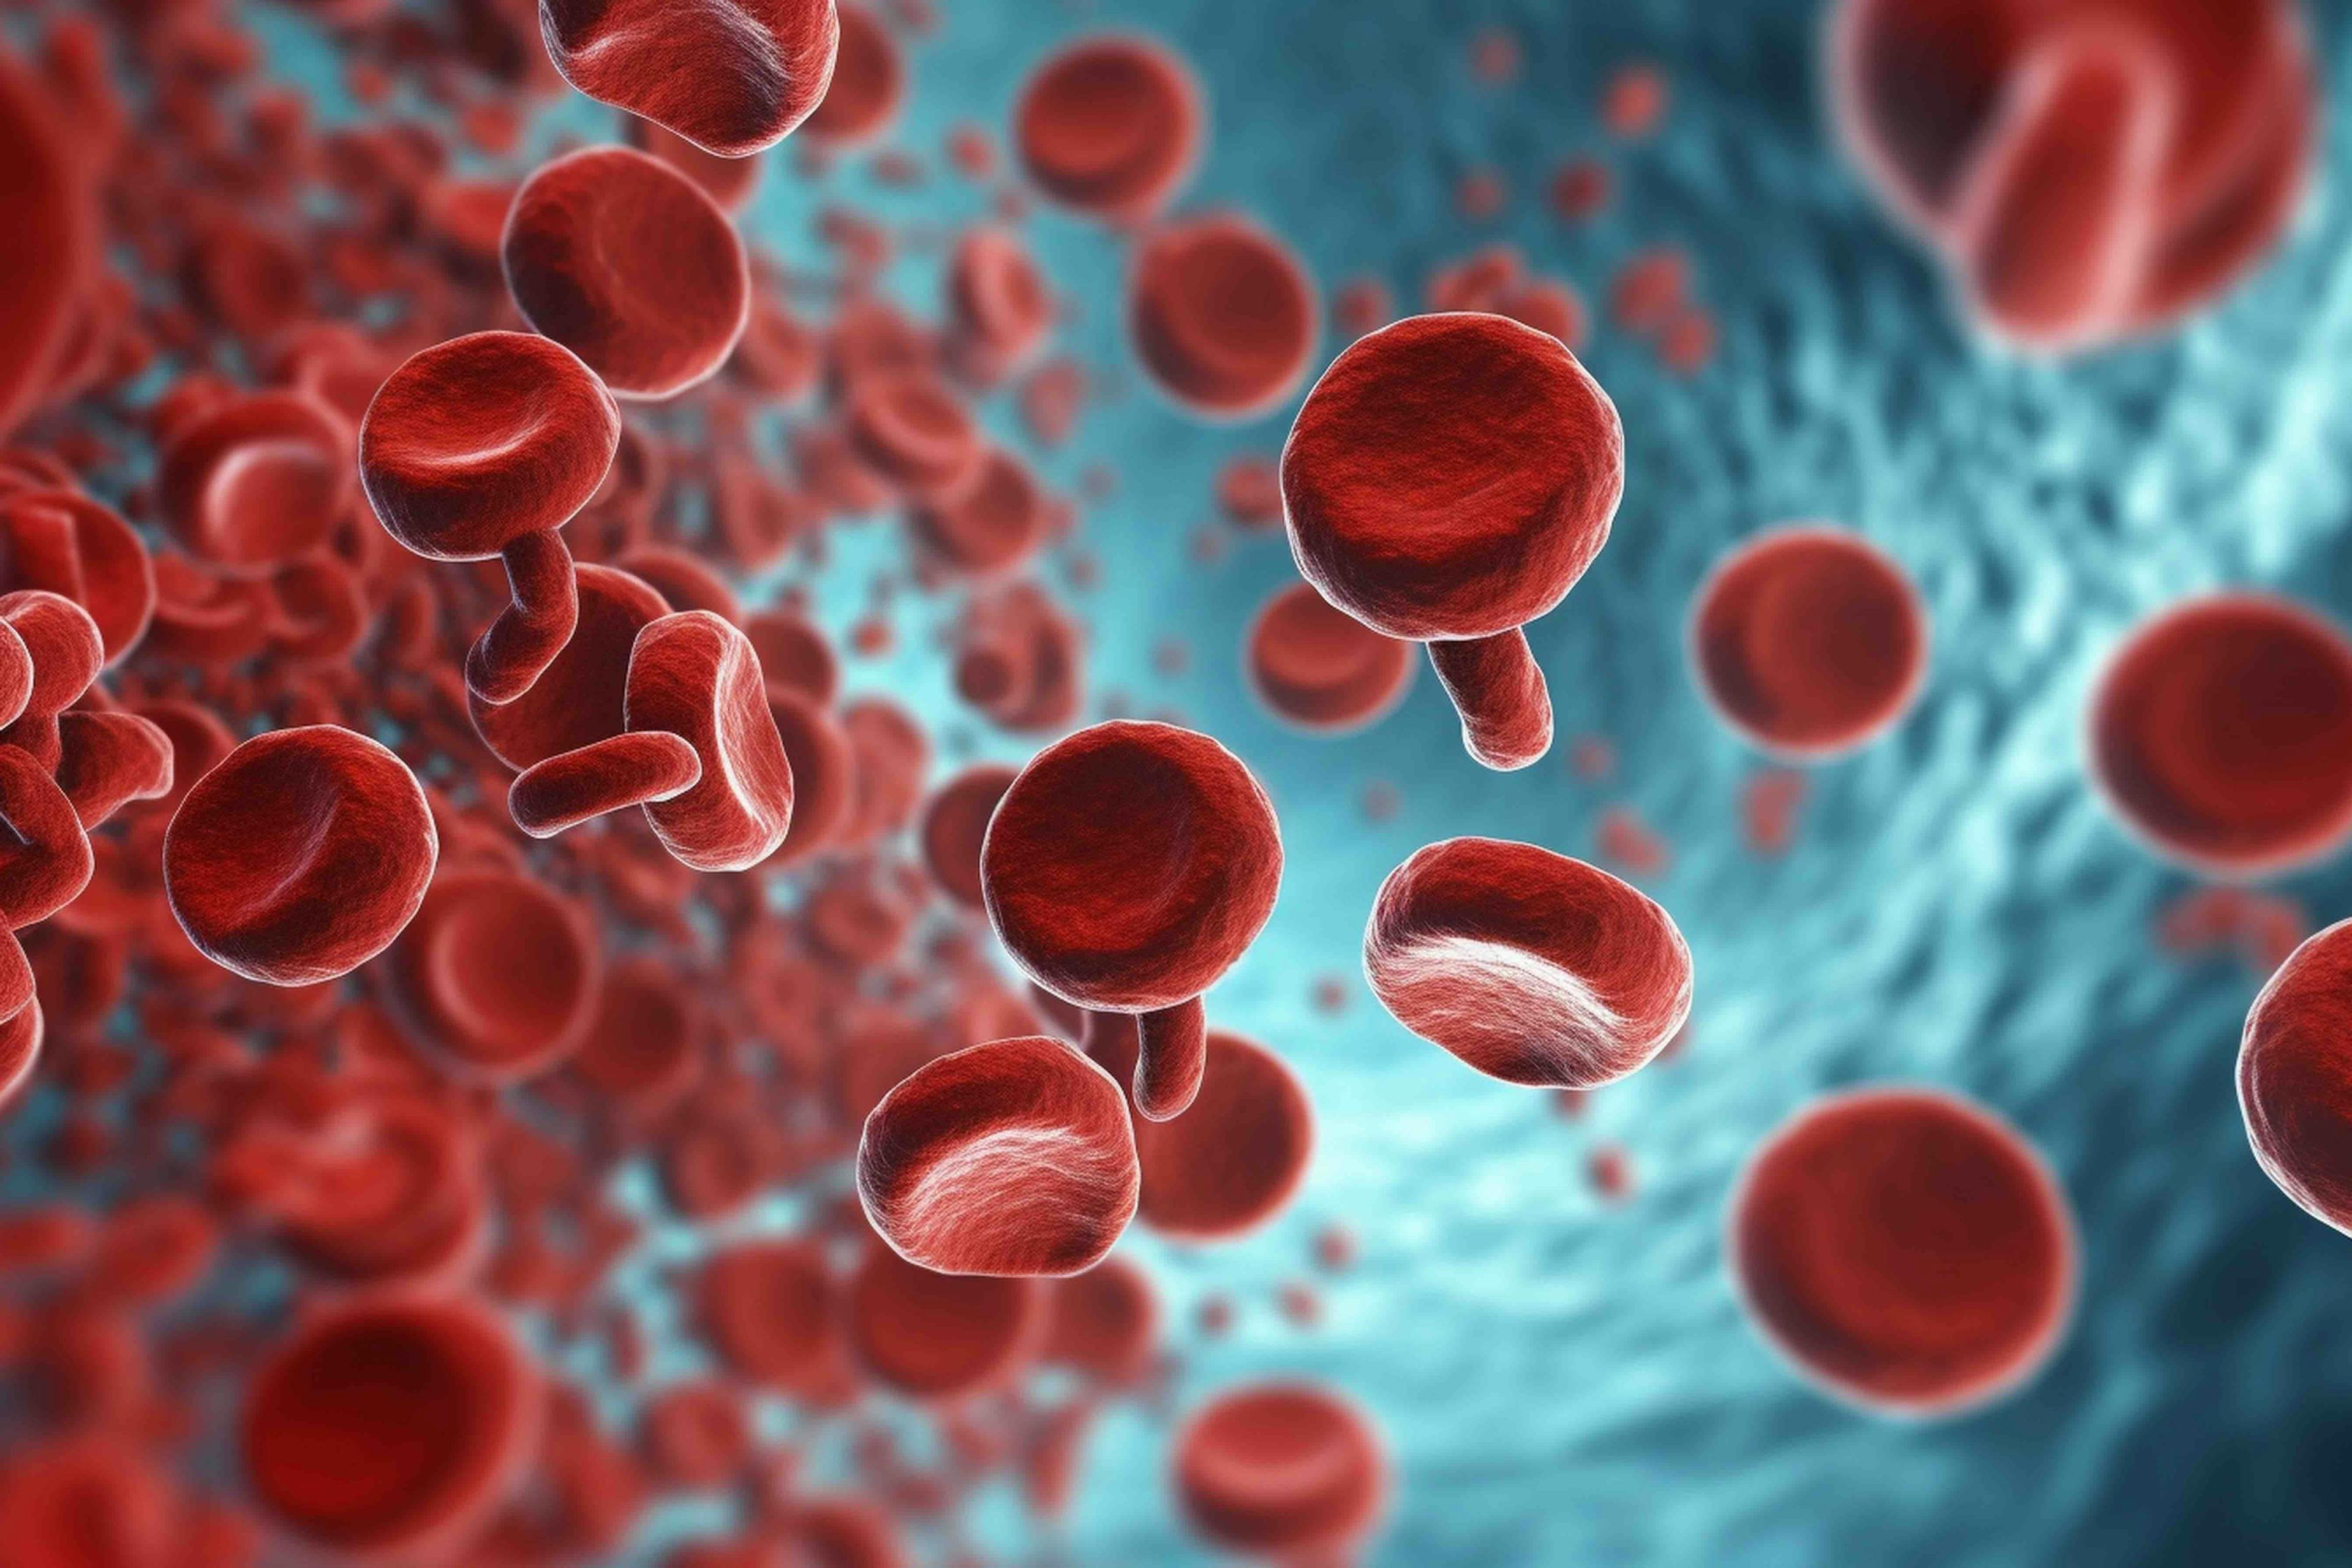 Blood cells flowing | Image credit: Катерина Євтехова - stock.adobe.com.jpg